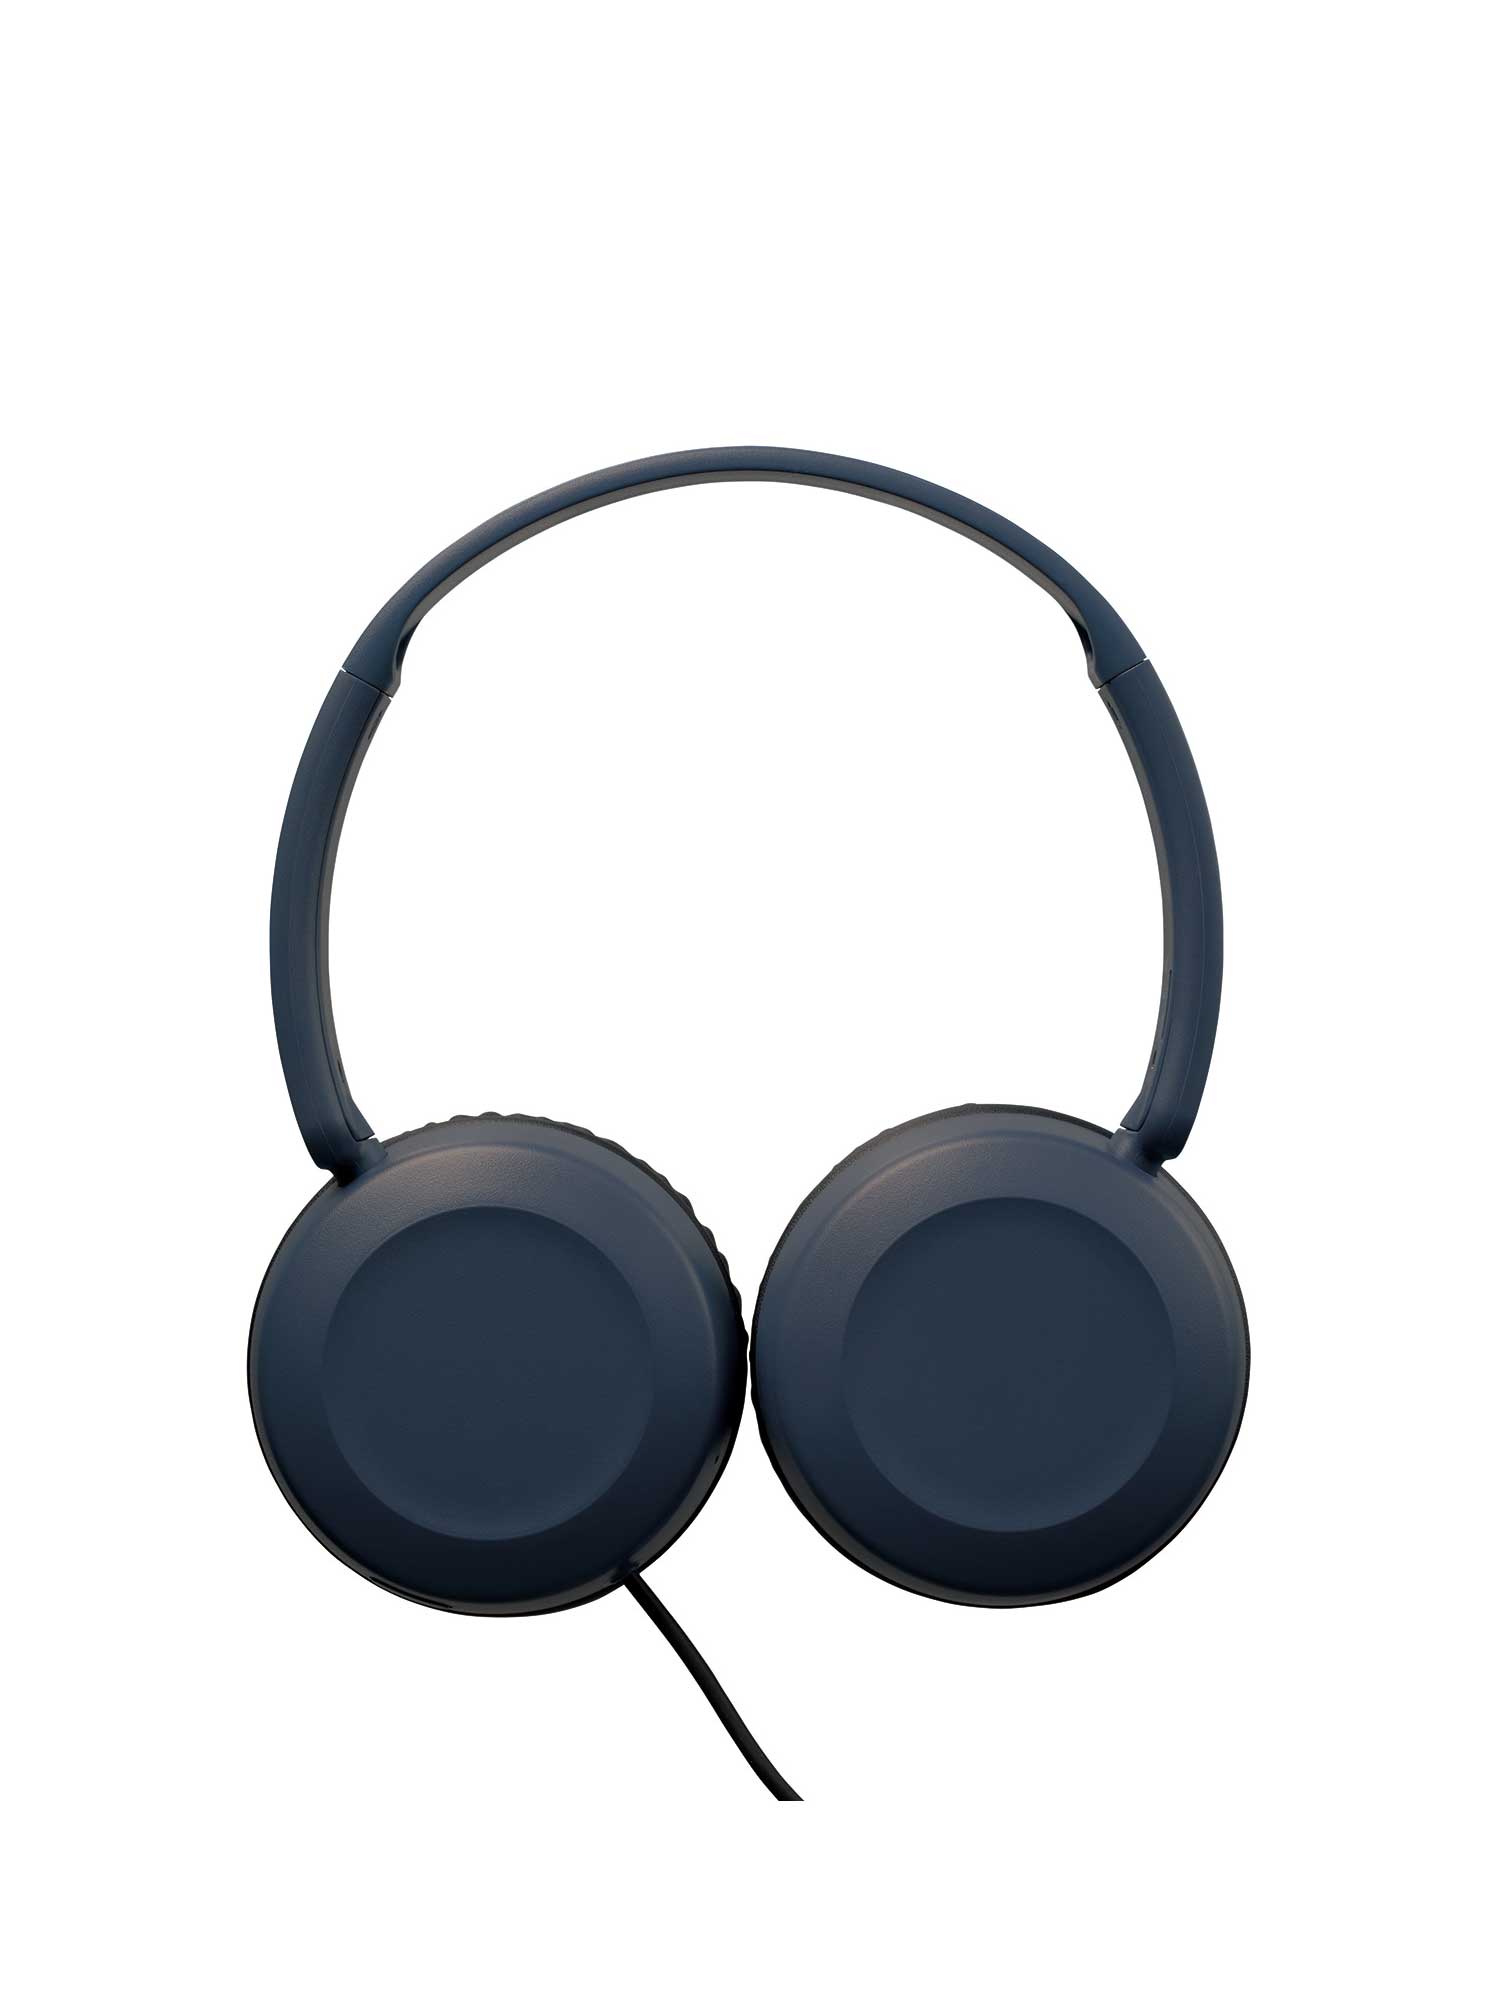 HA-S31M-A Wired Bluetooth On-Ear Headphones swivel design